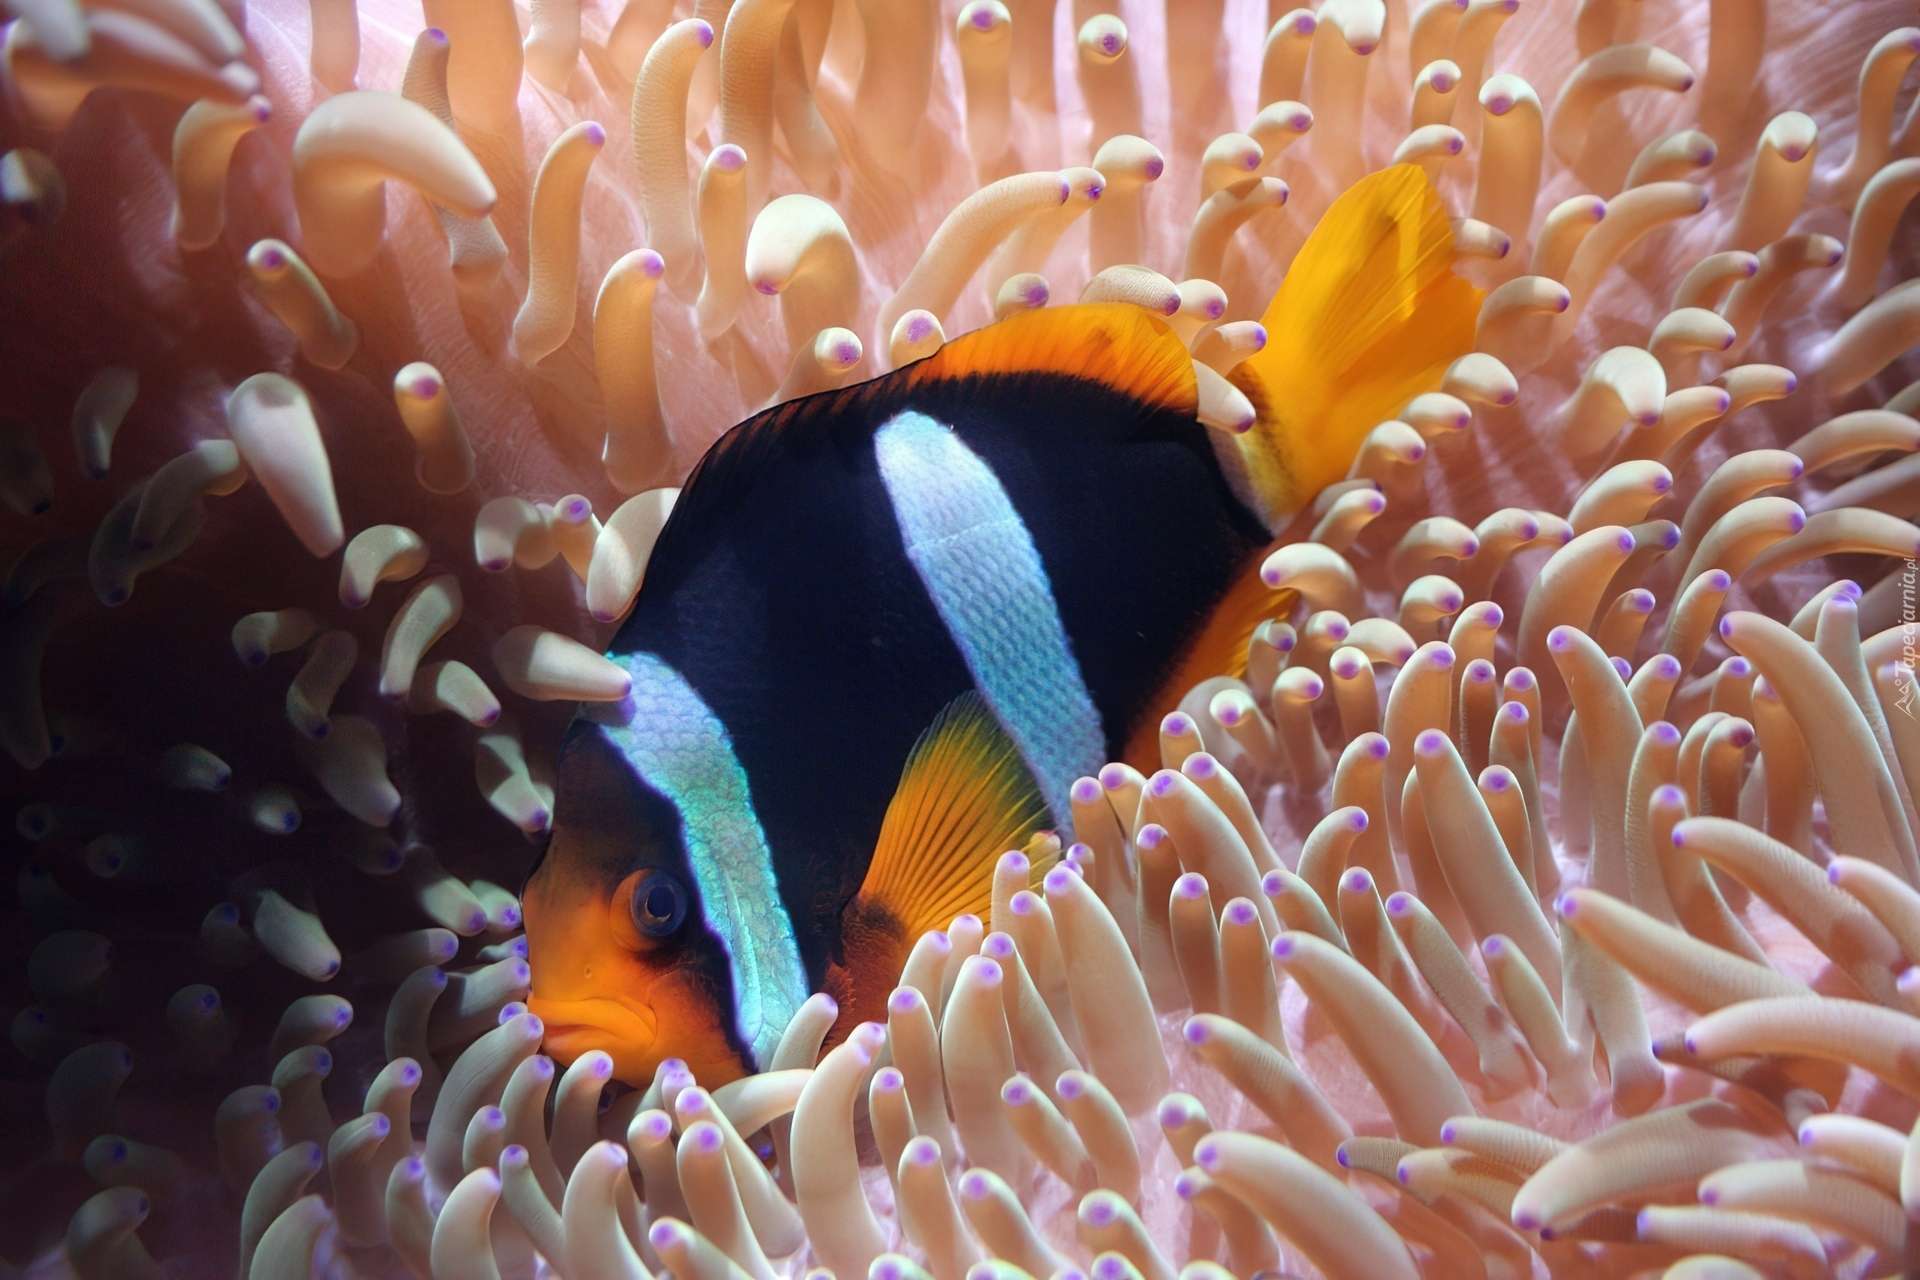 Clownfish care